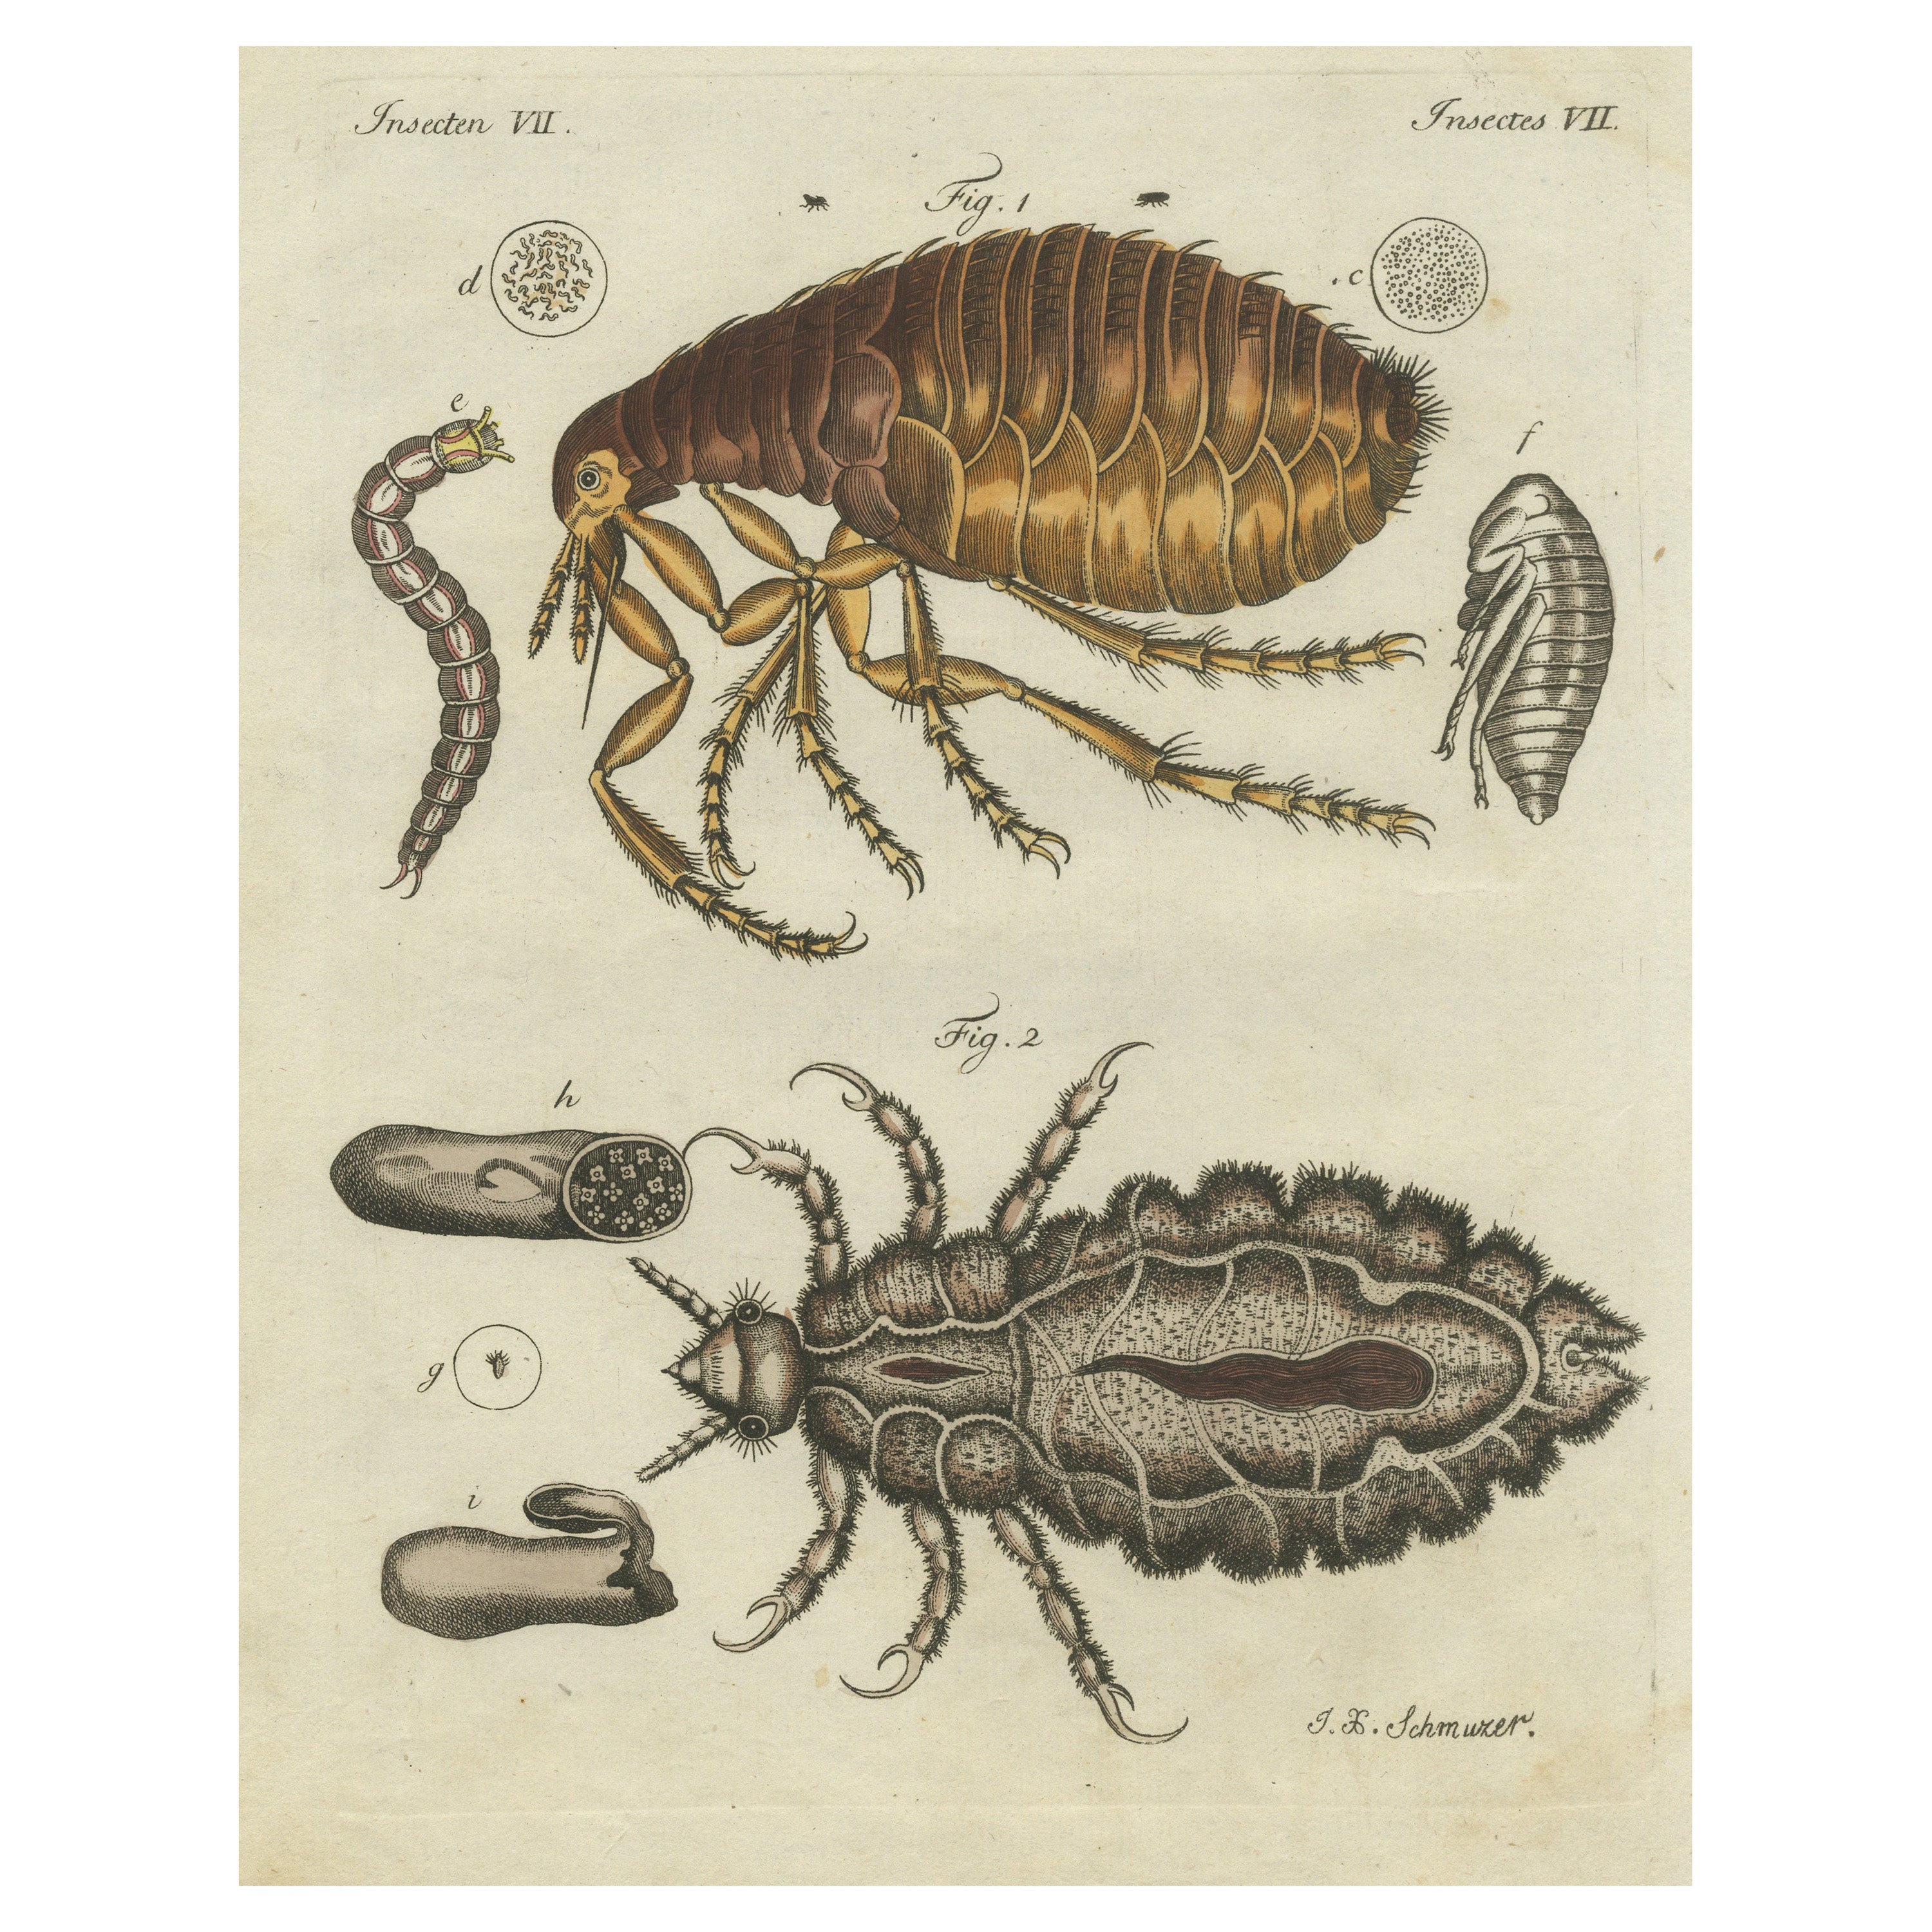 Original Antique Print of the Human Flea and Human Louse